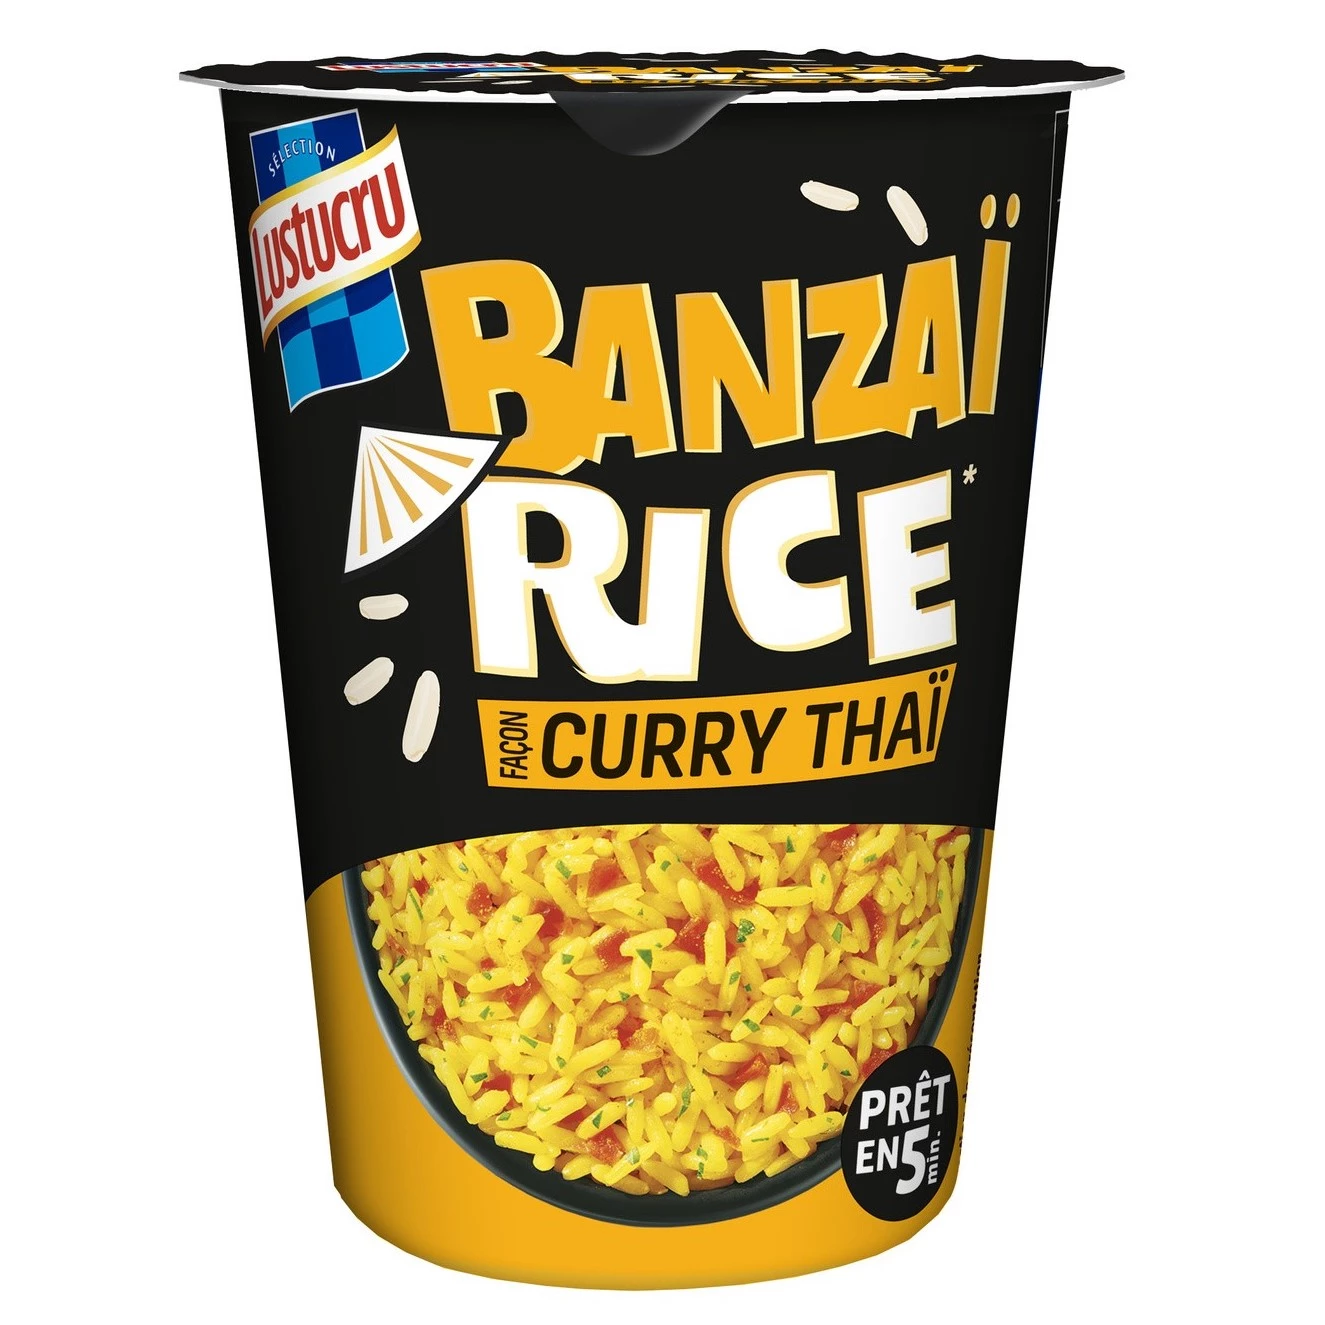 Lustu.banzai Rice Curry 87g